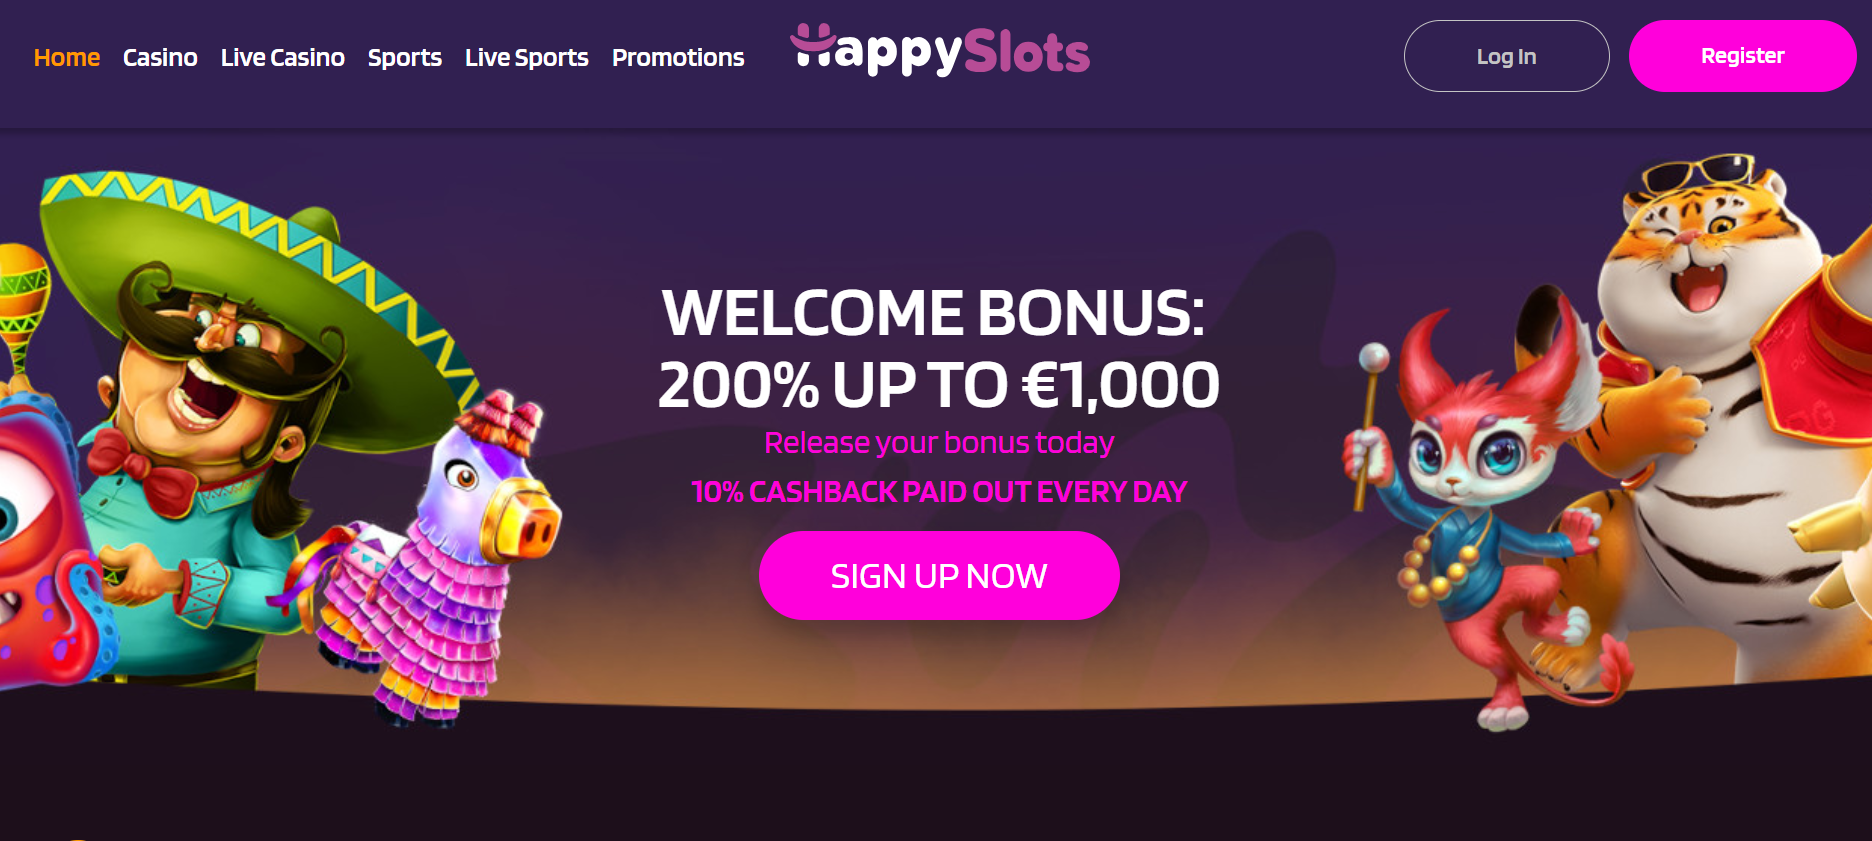 Happy Slots Home Page Screenshot